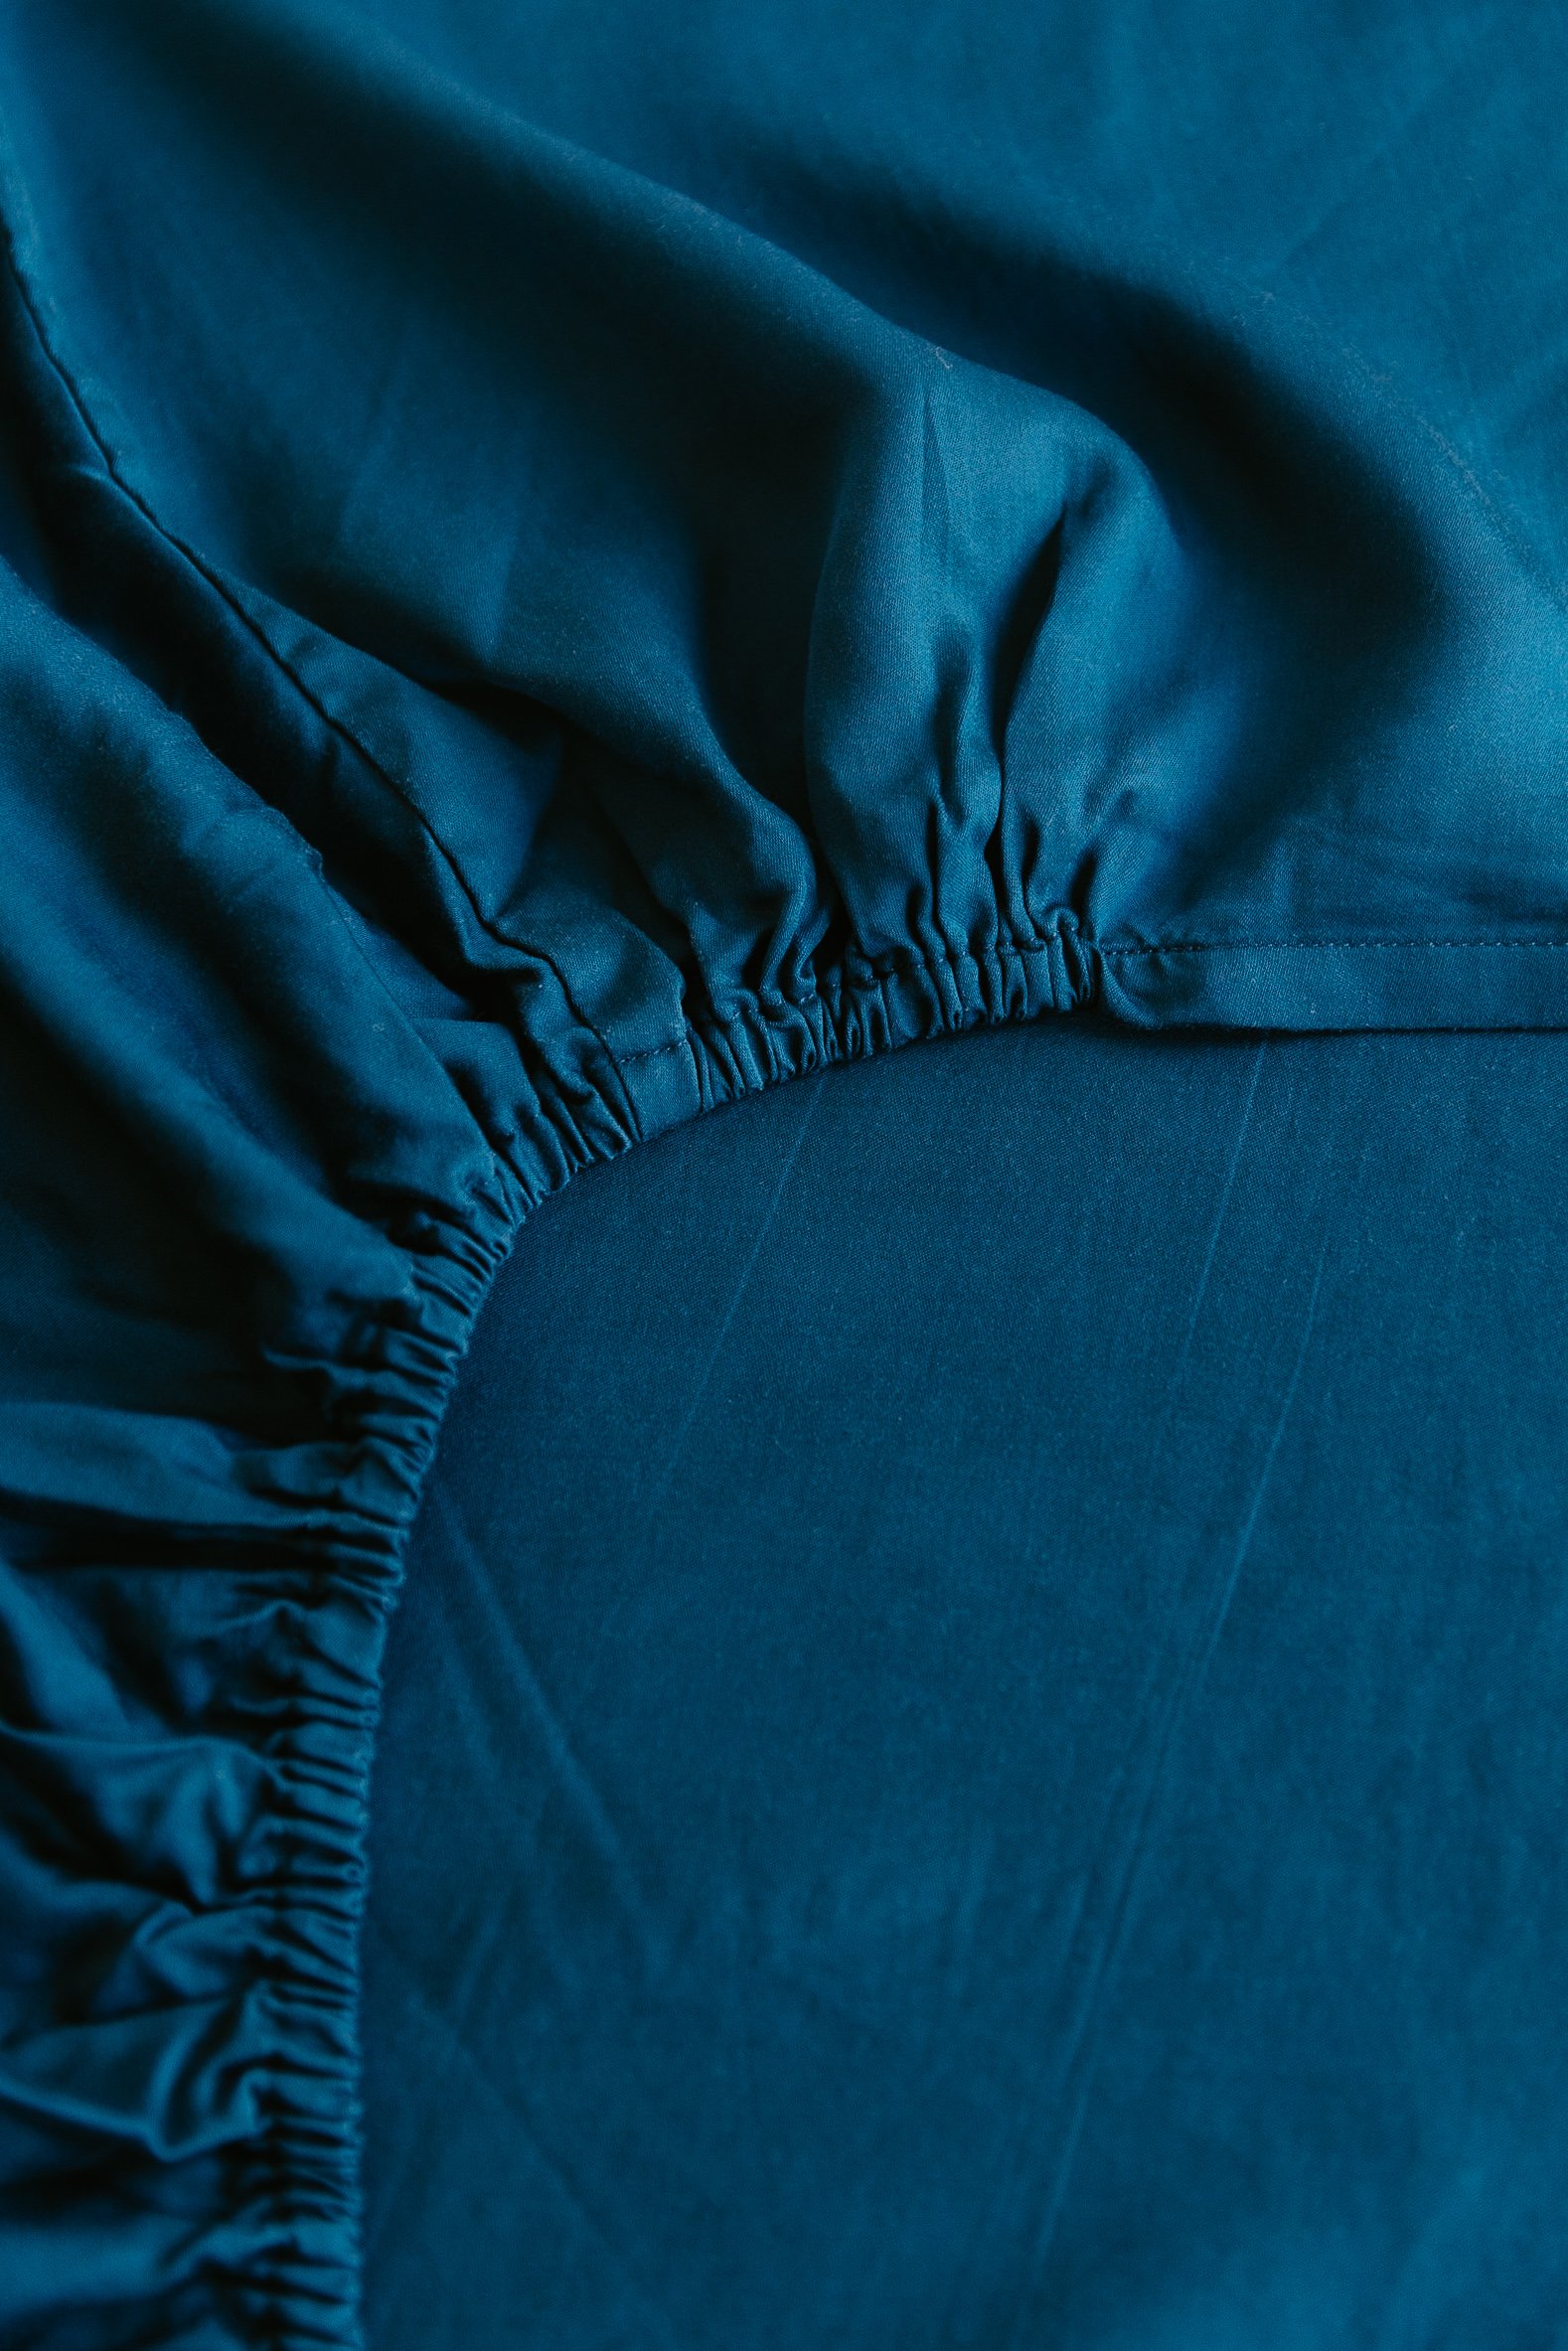 Store — Leisurely | Tencel bedsheets